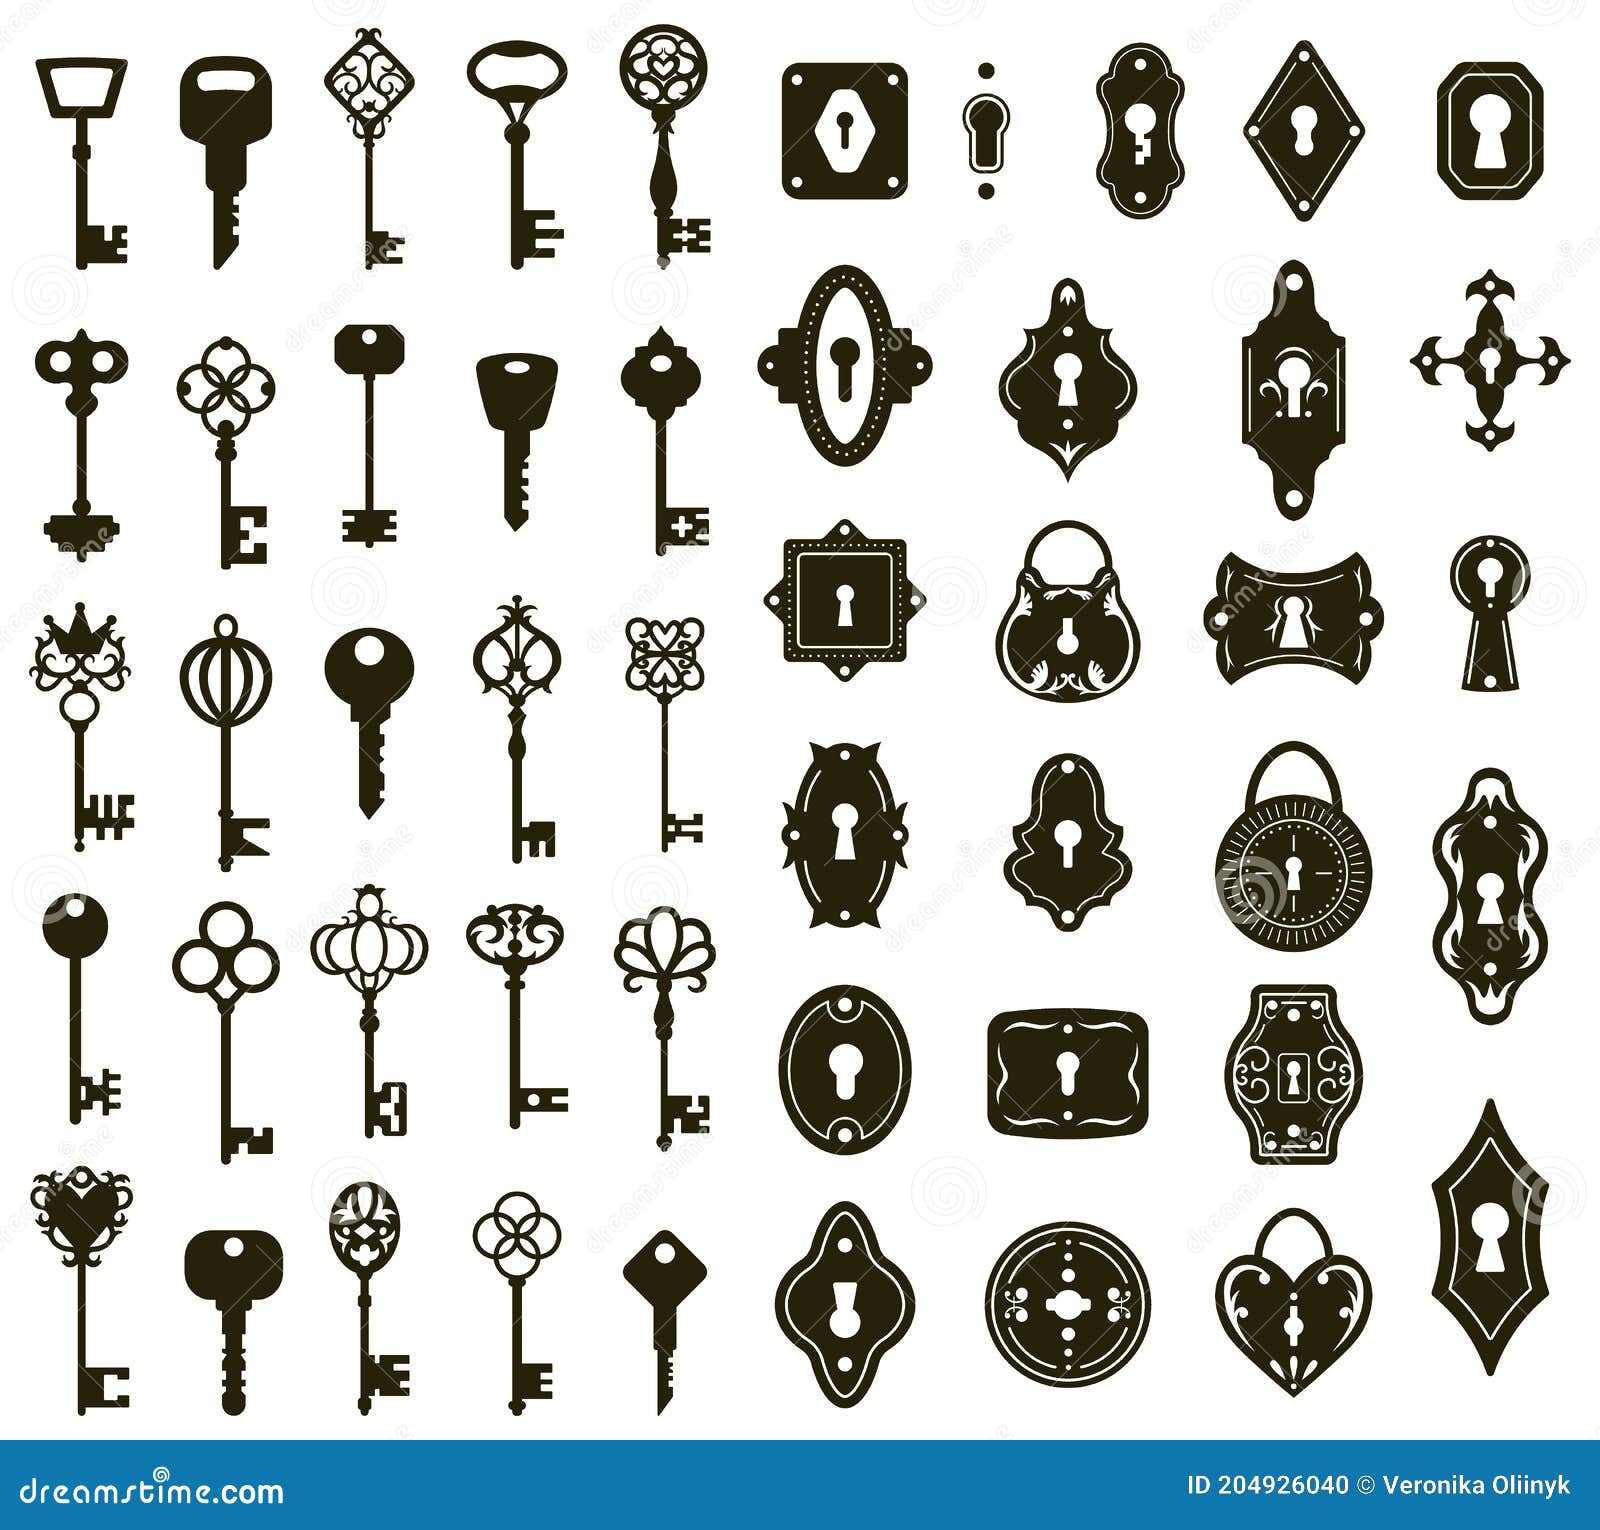 Skeleton Keys Silhouette Vector Illustration | CartoonDealer.com #2572752